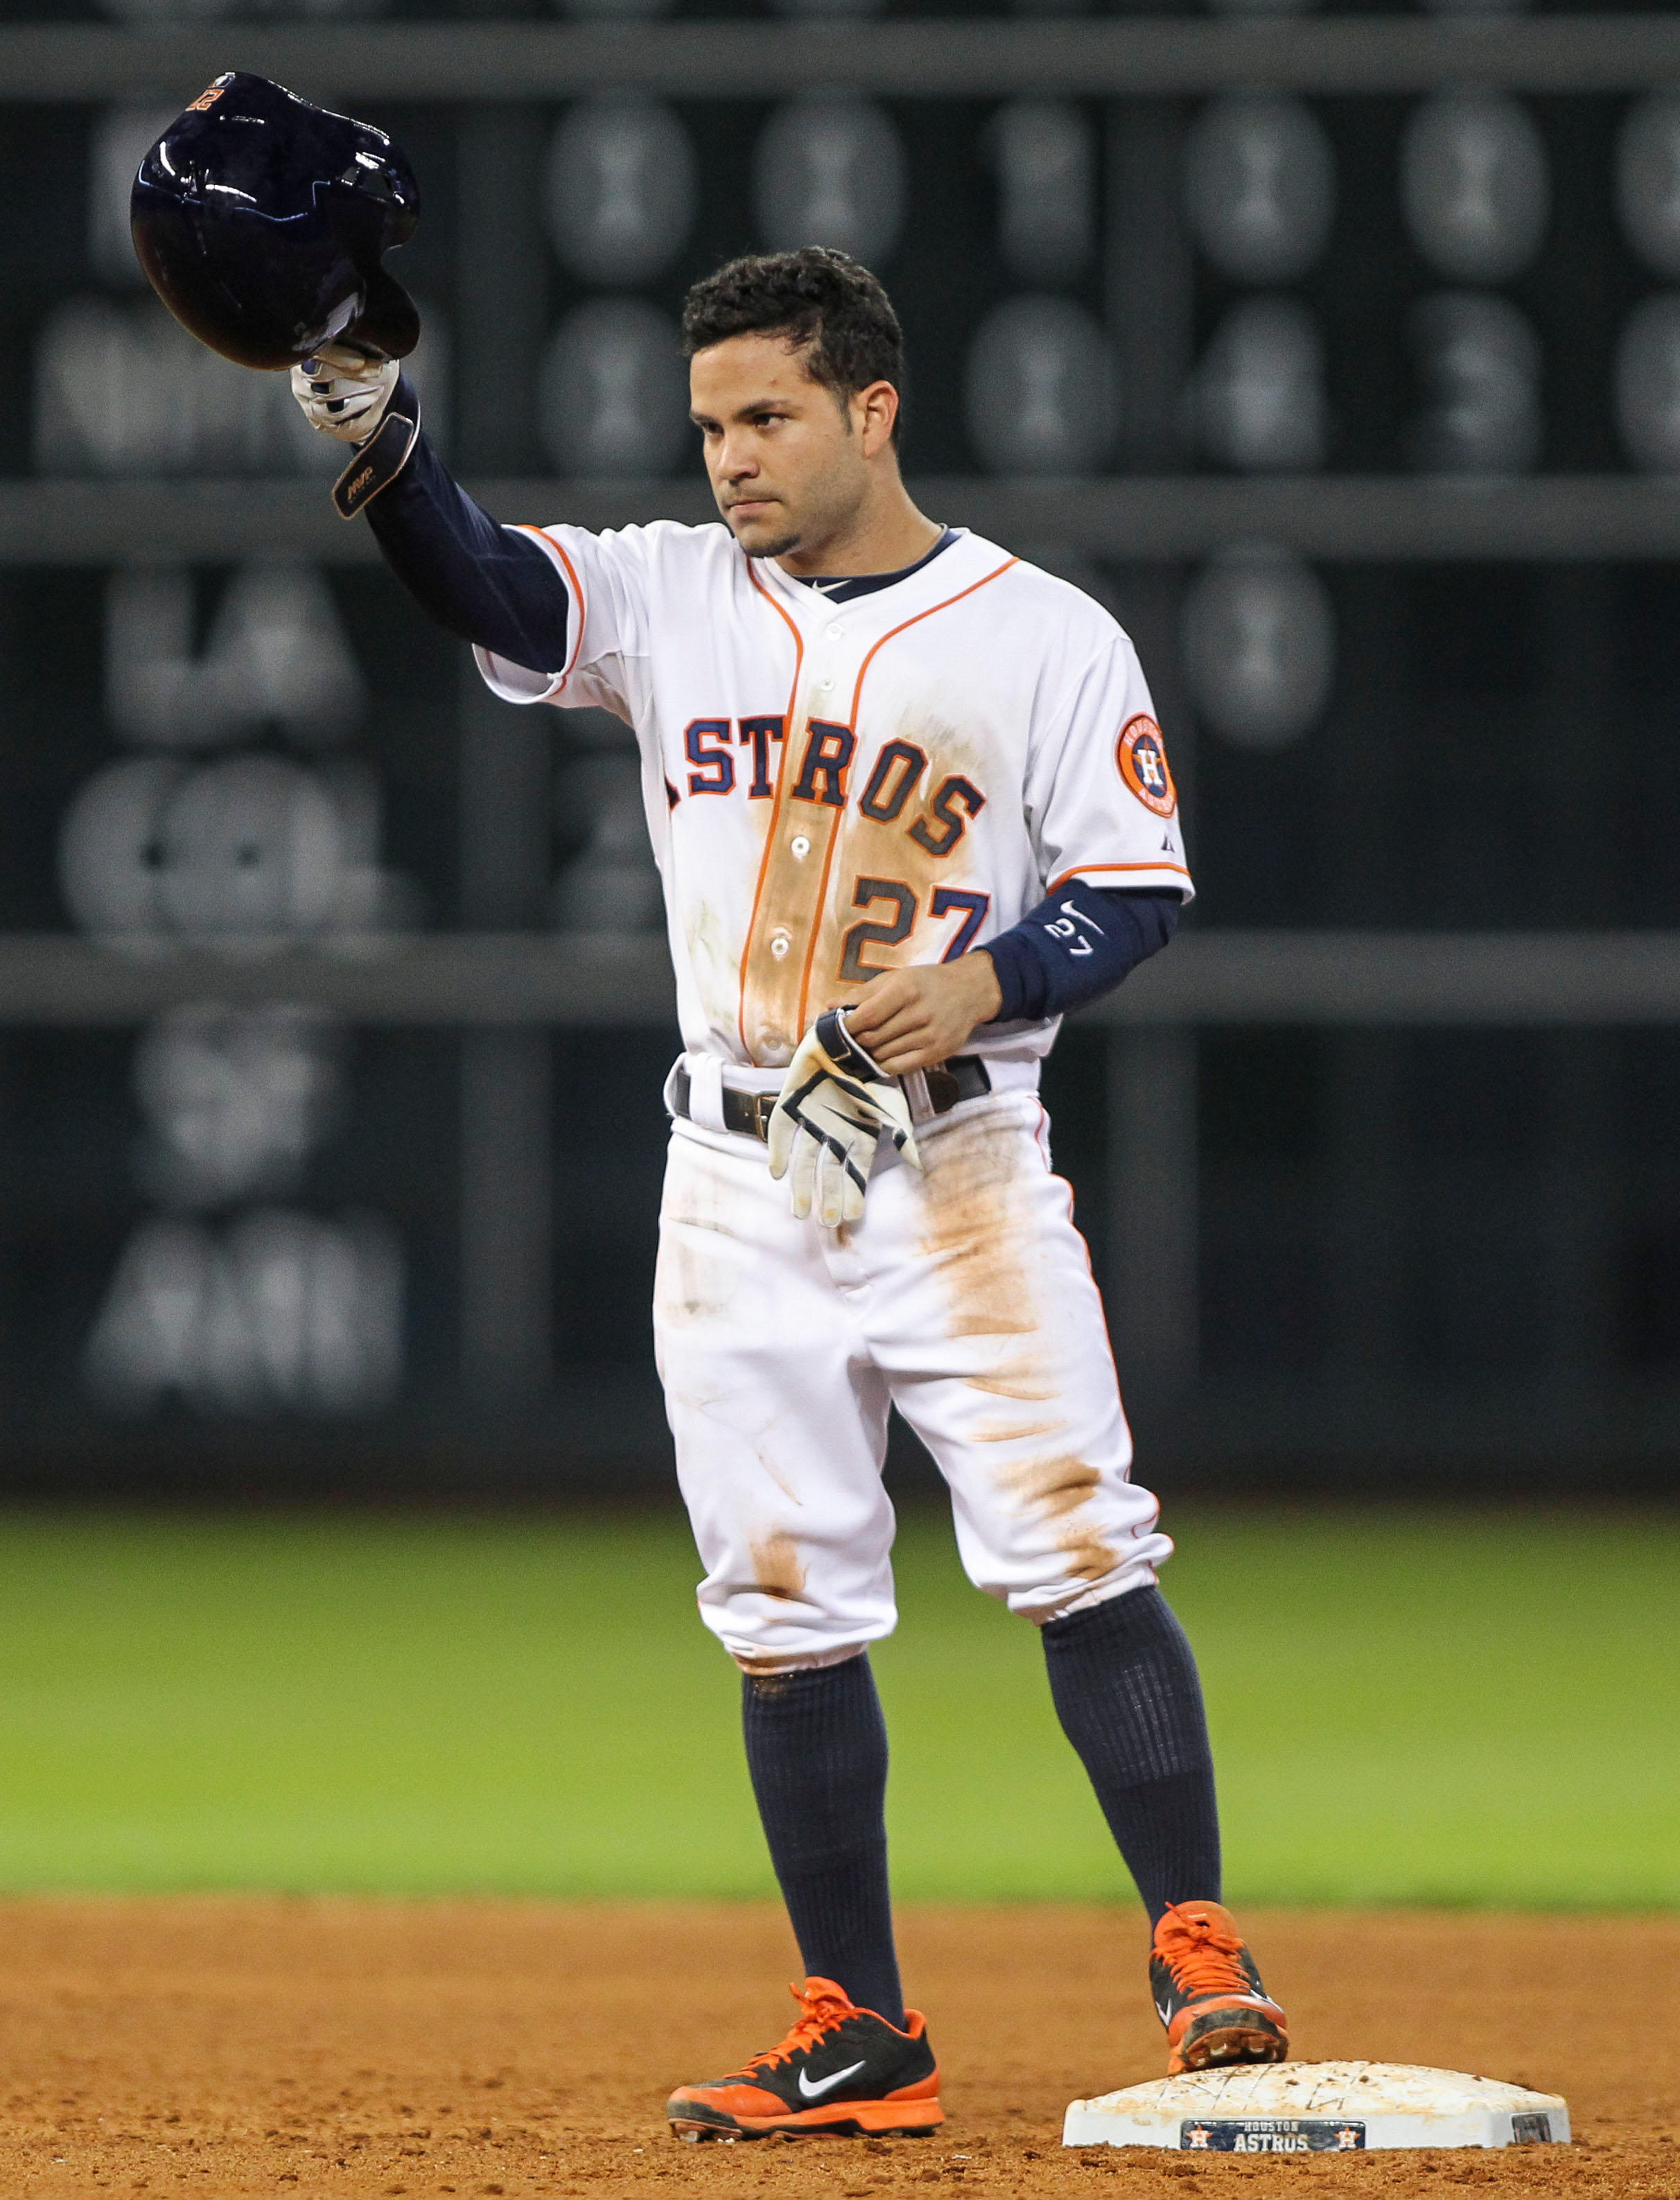 Jose Altuve 27 Houston Astros baseball player action pose